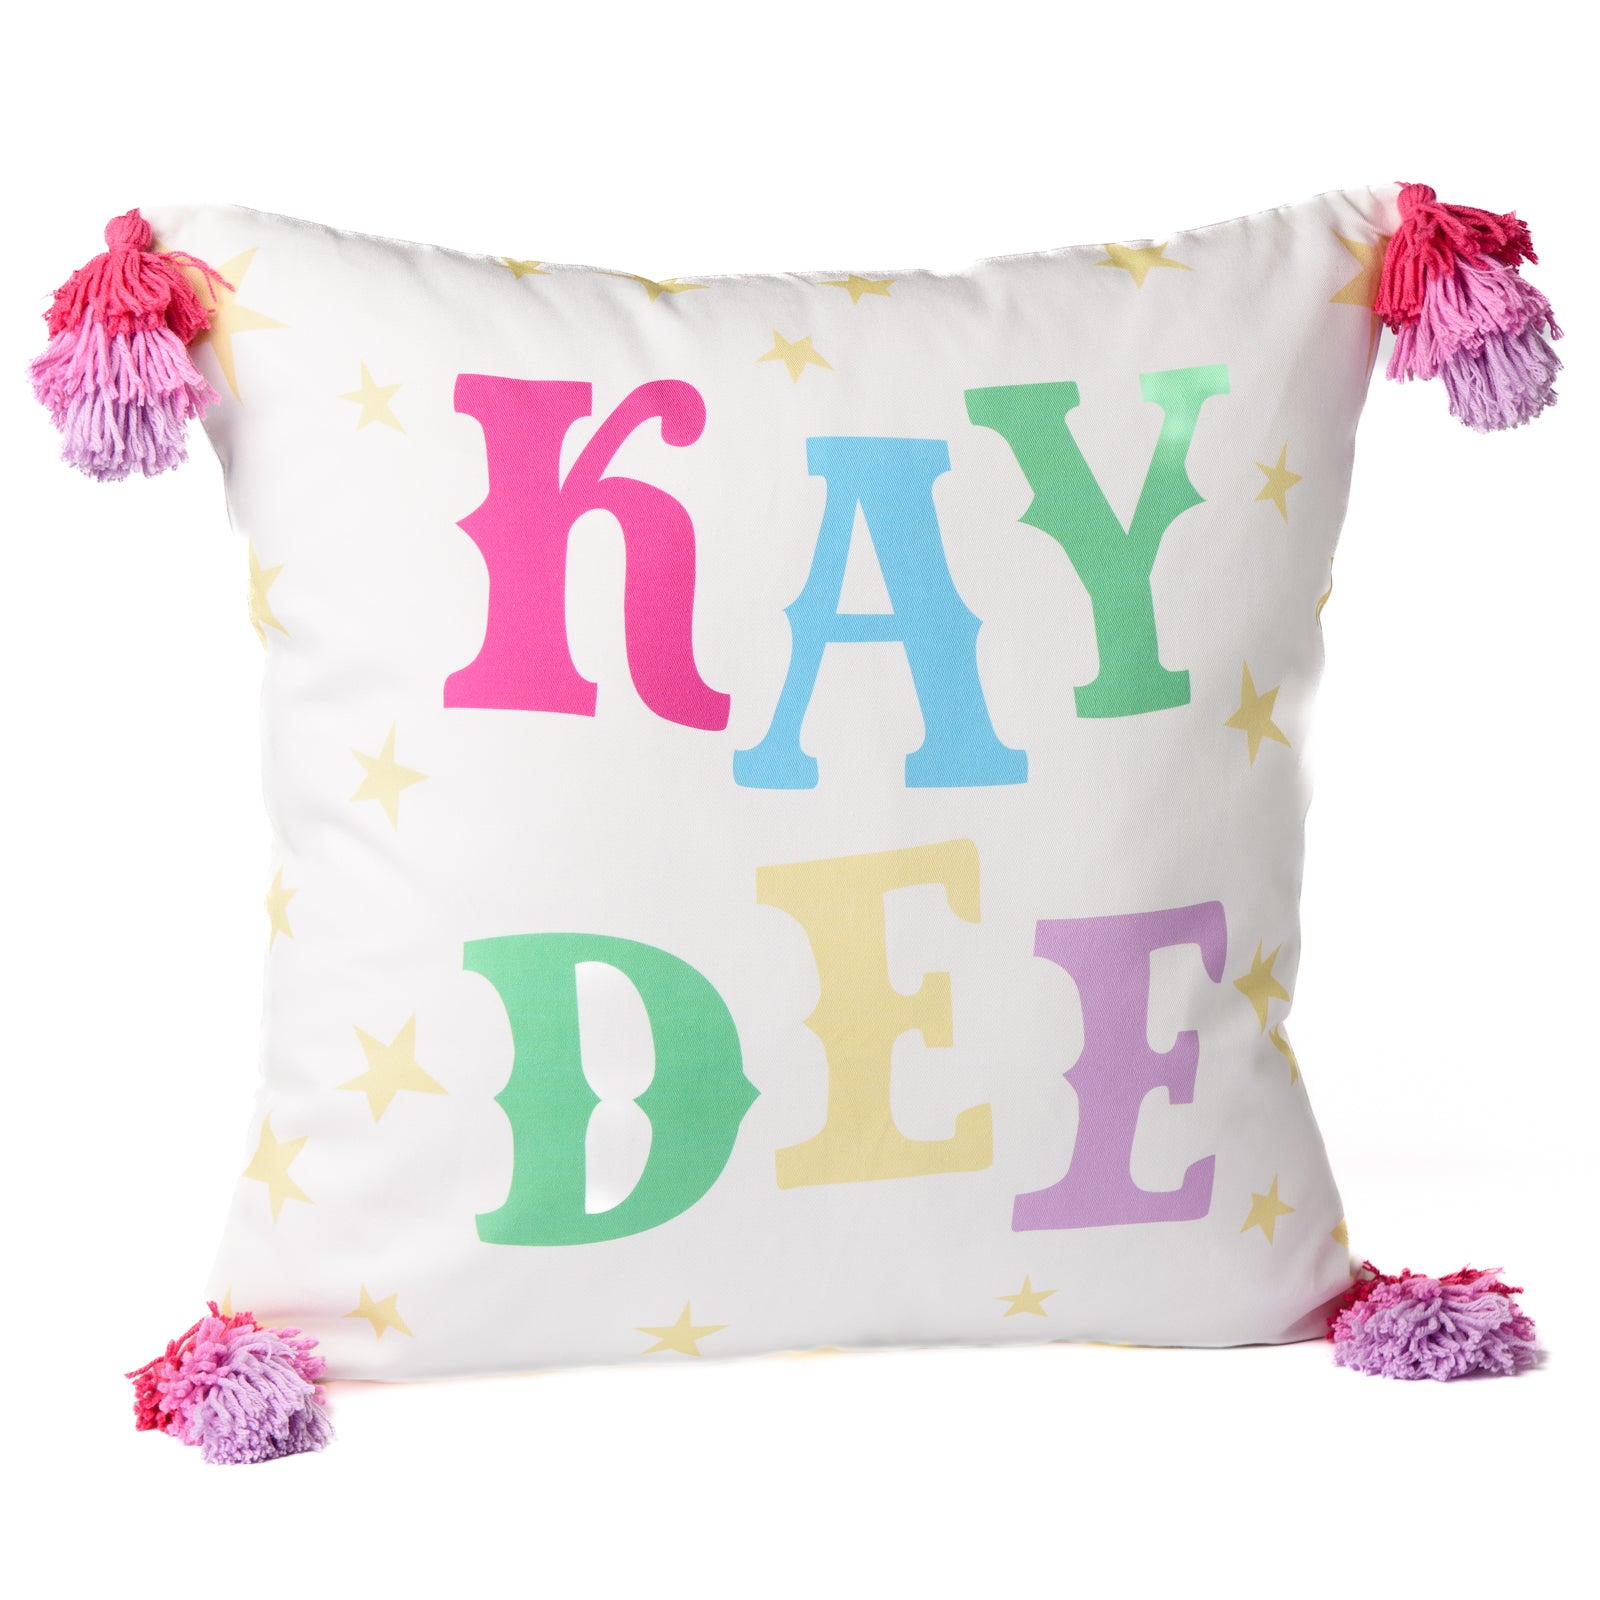 KAY DEE "Oh My Stars" Printed Pillow